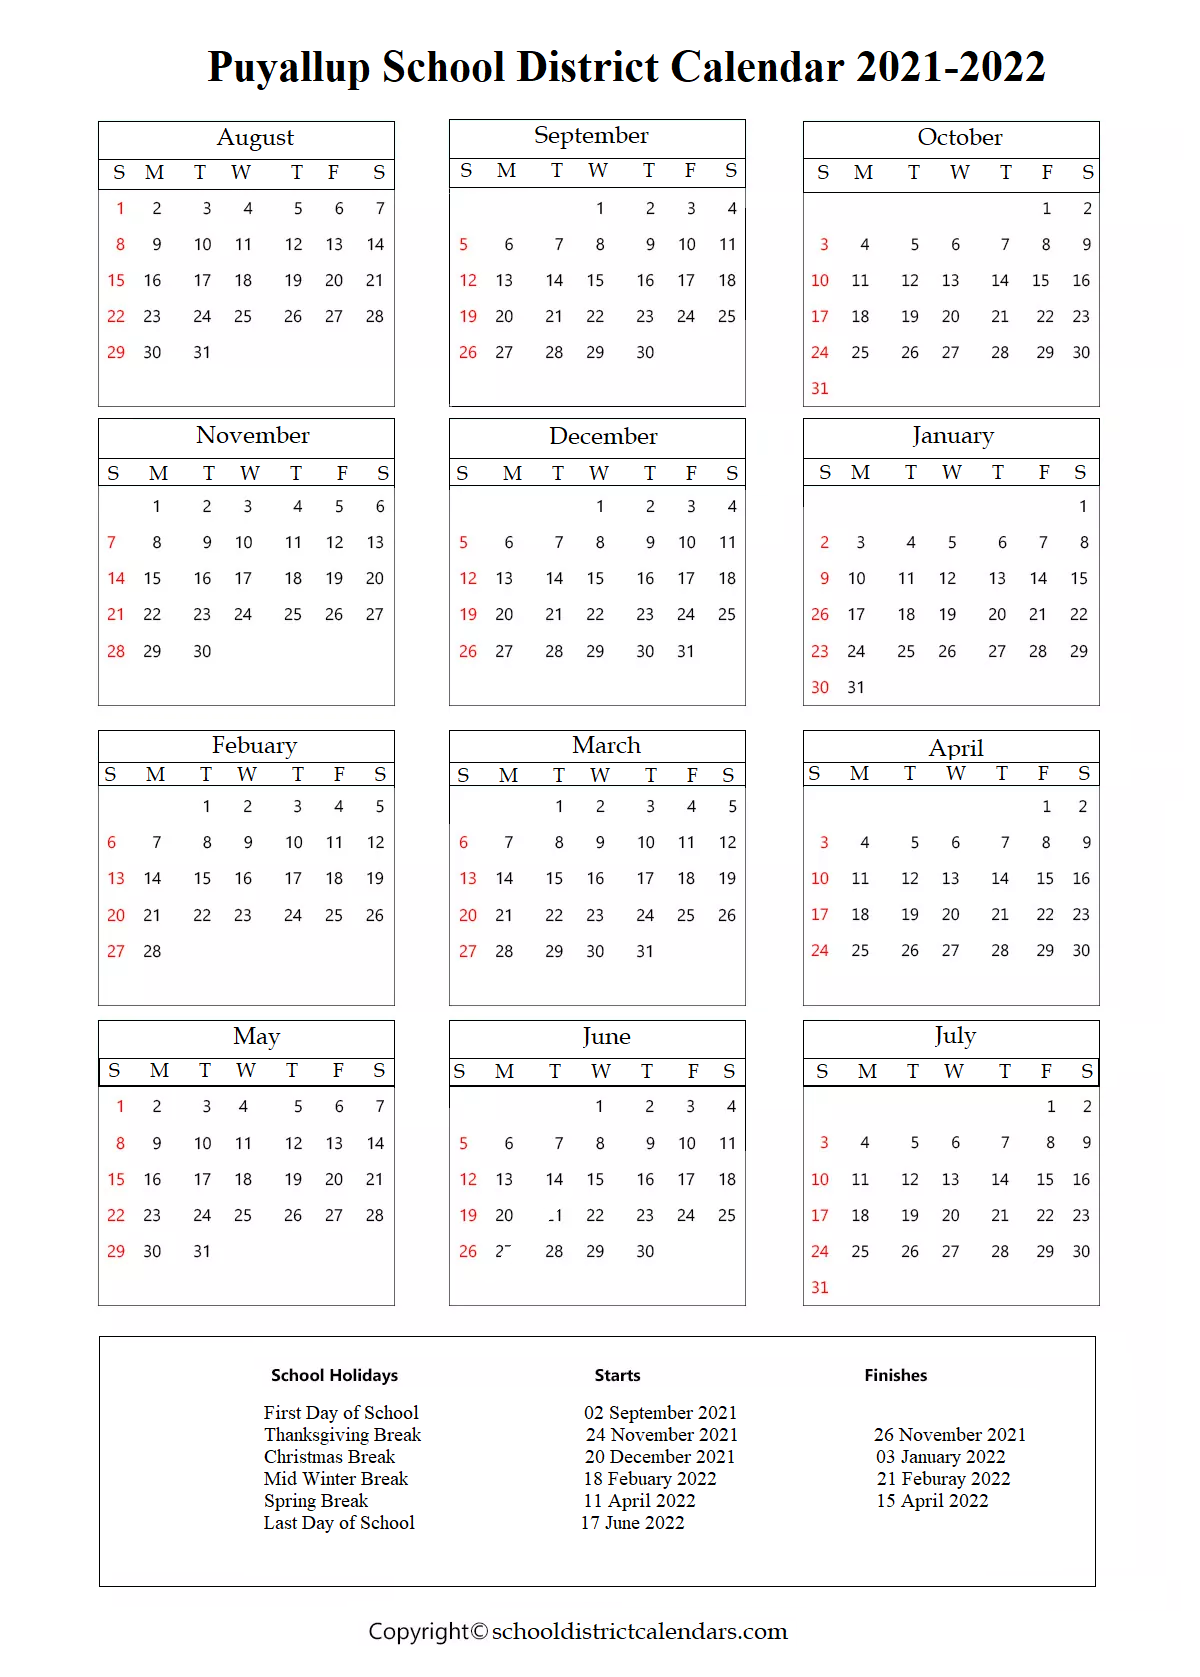 Puyallup School District, Washington Calendar Holidays 2021-2022